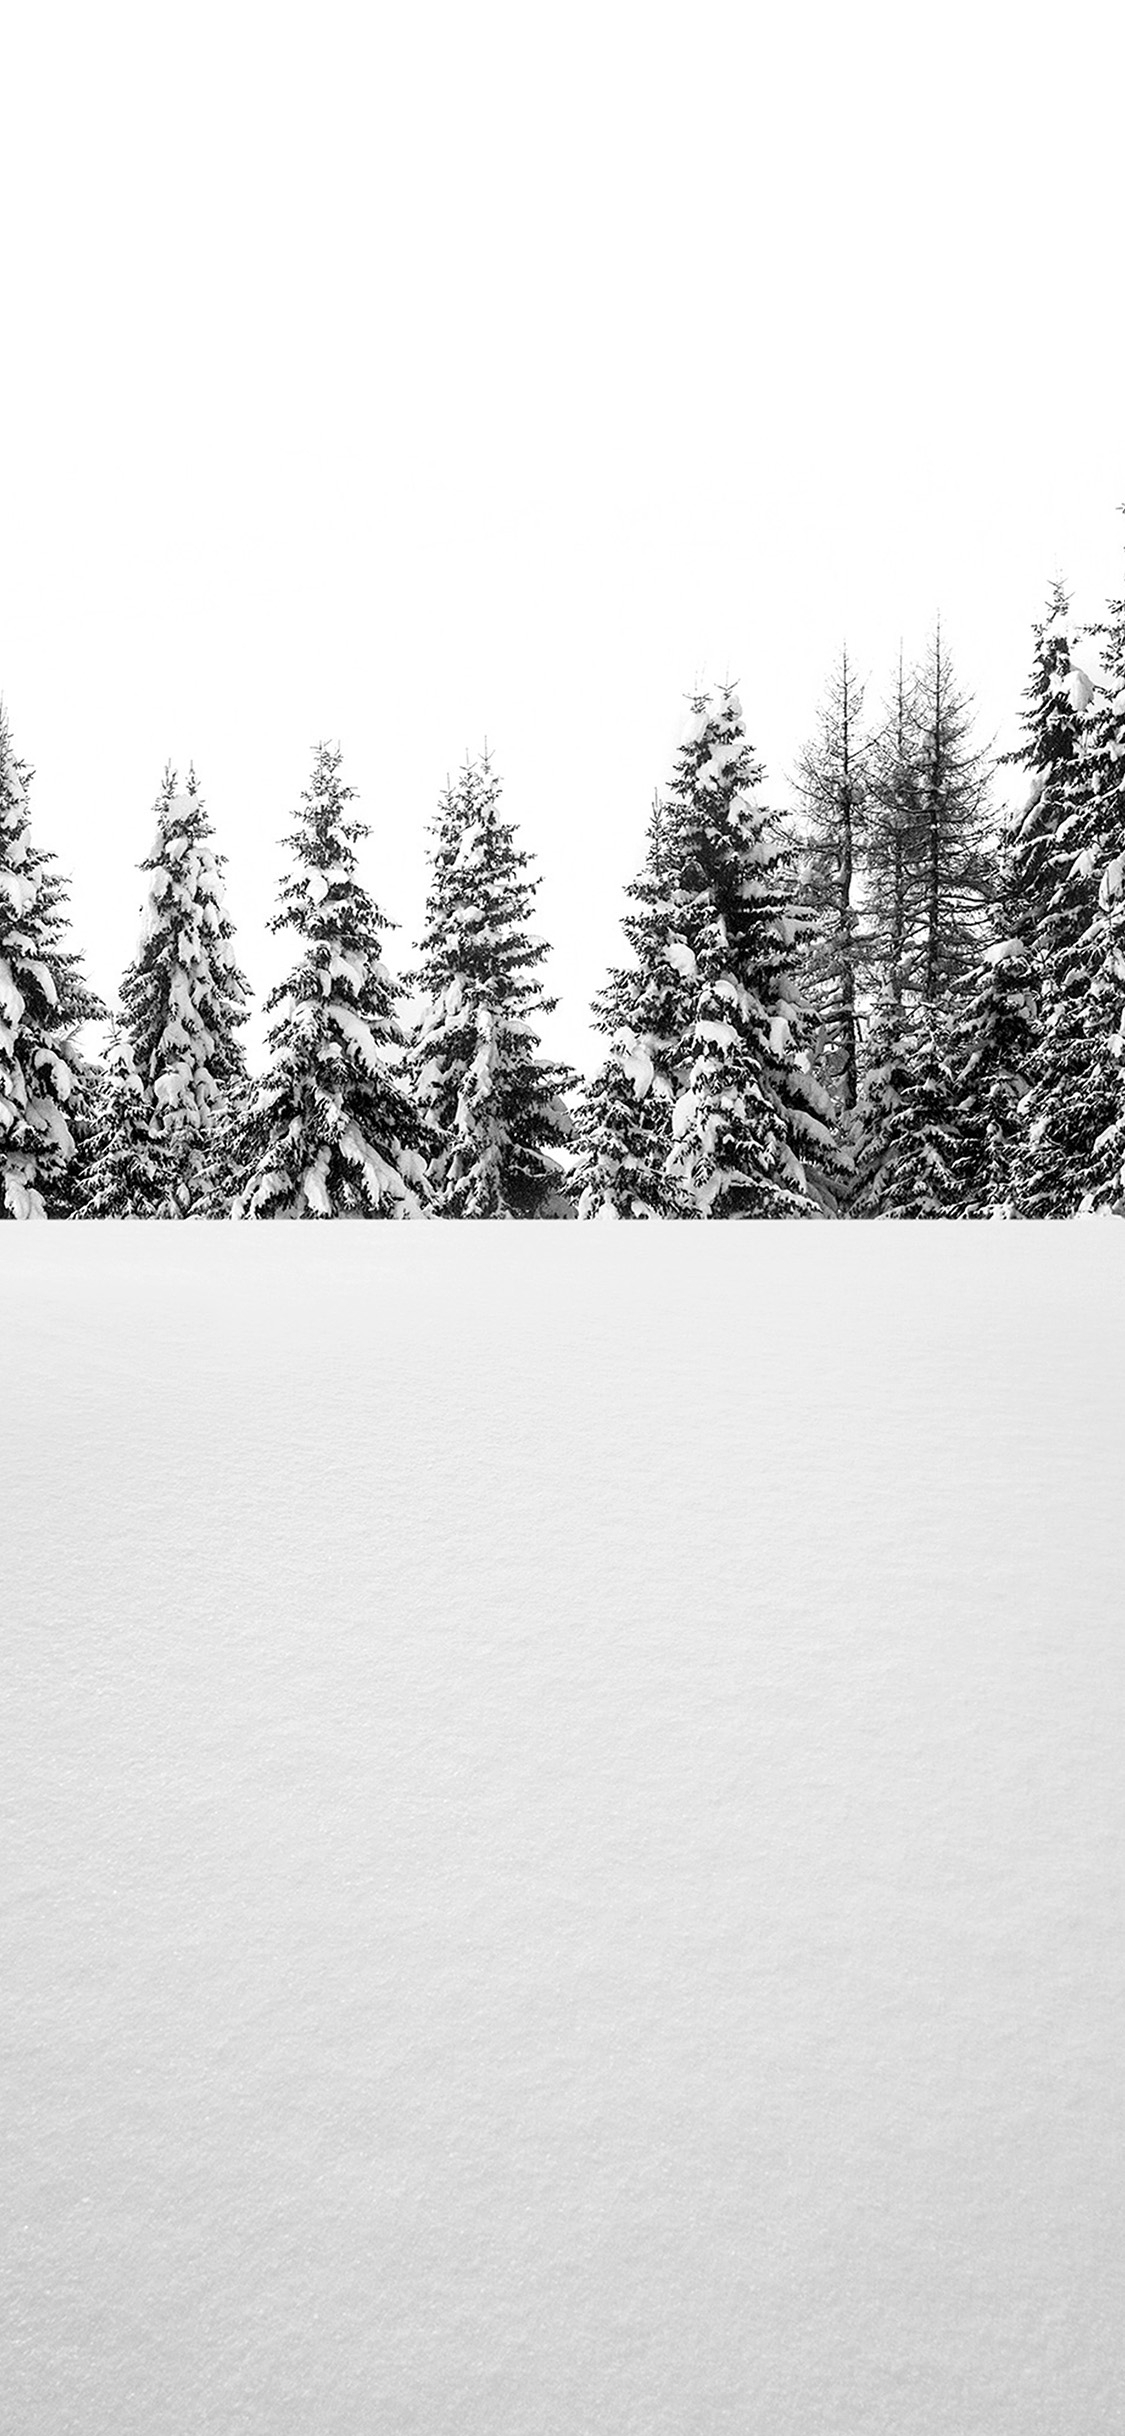 1125x2436 | iPhone11 wallpaper | oa63-snow-tree-winter-white-nature